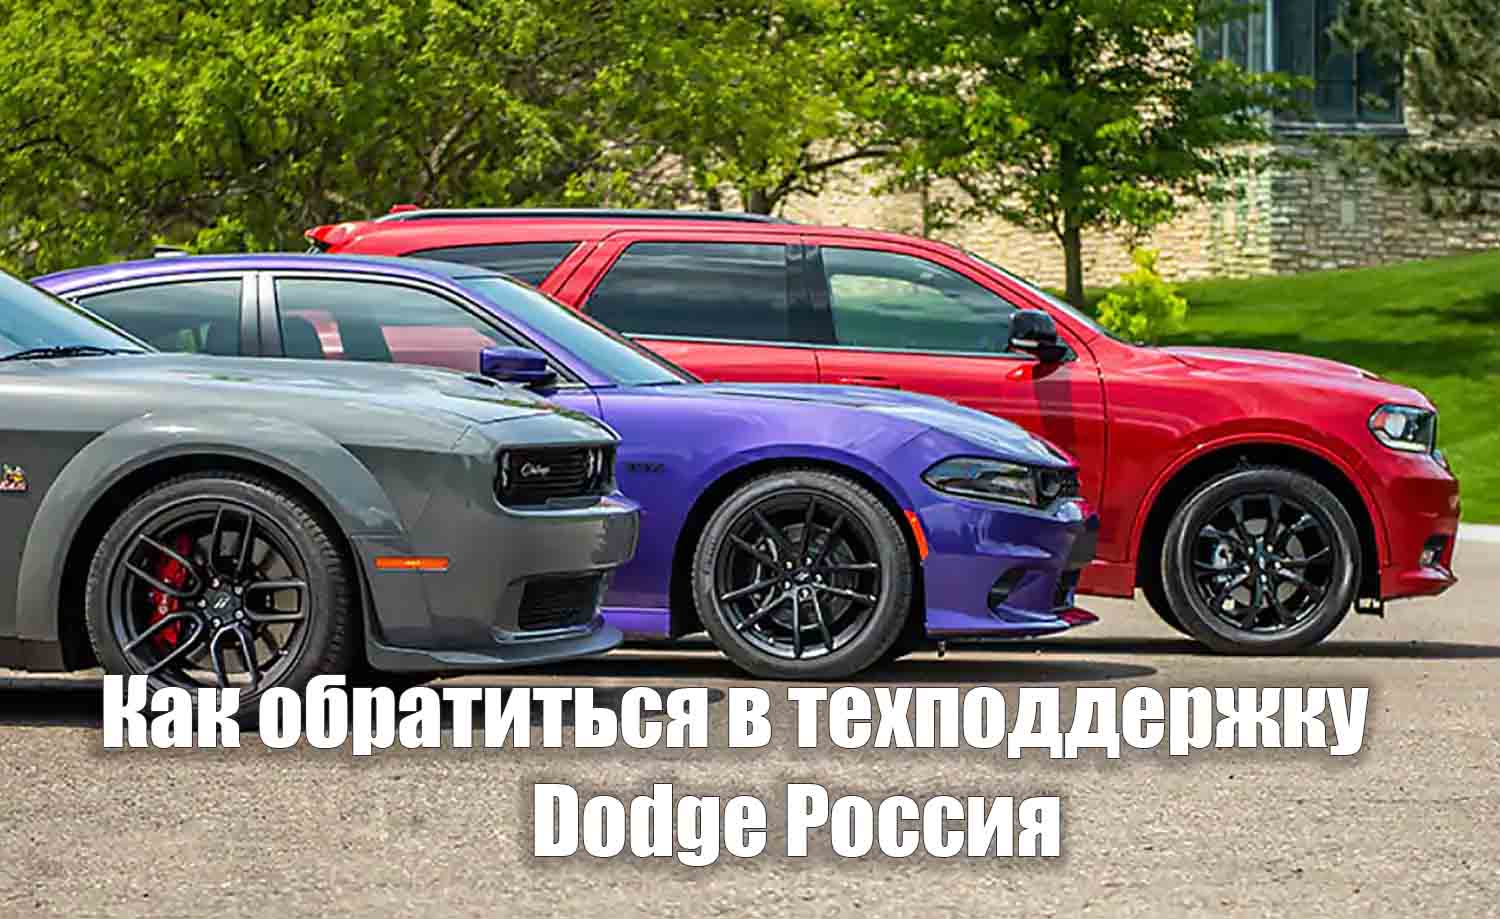 Dodge Россия